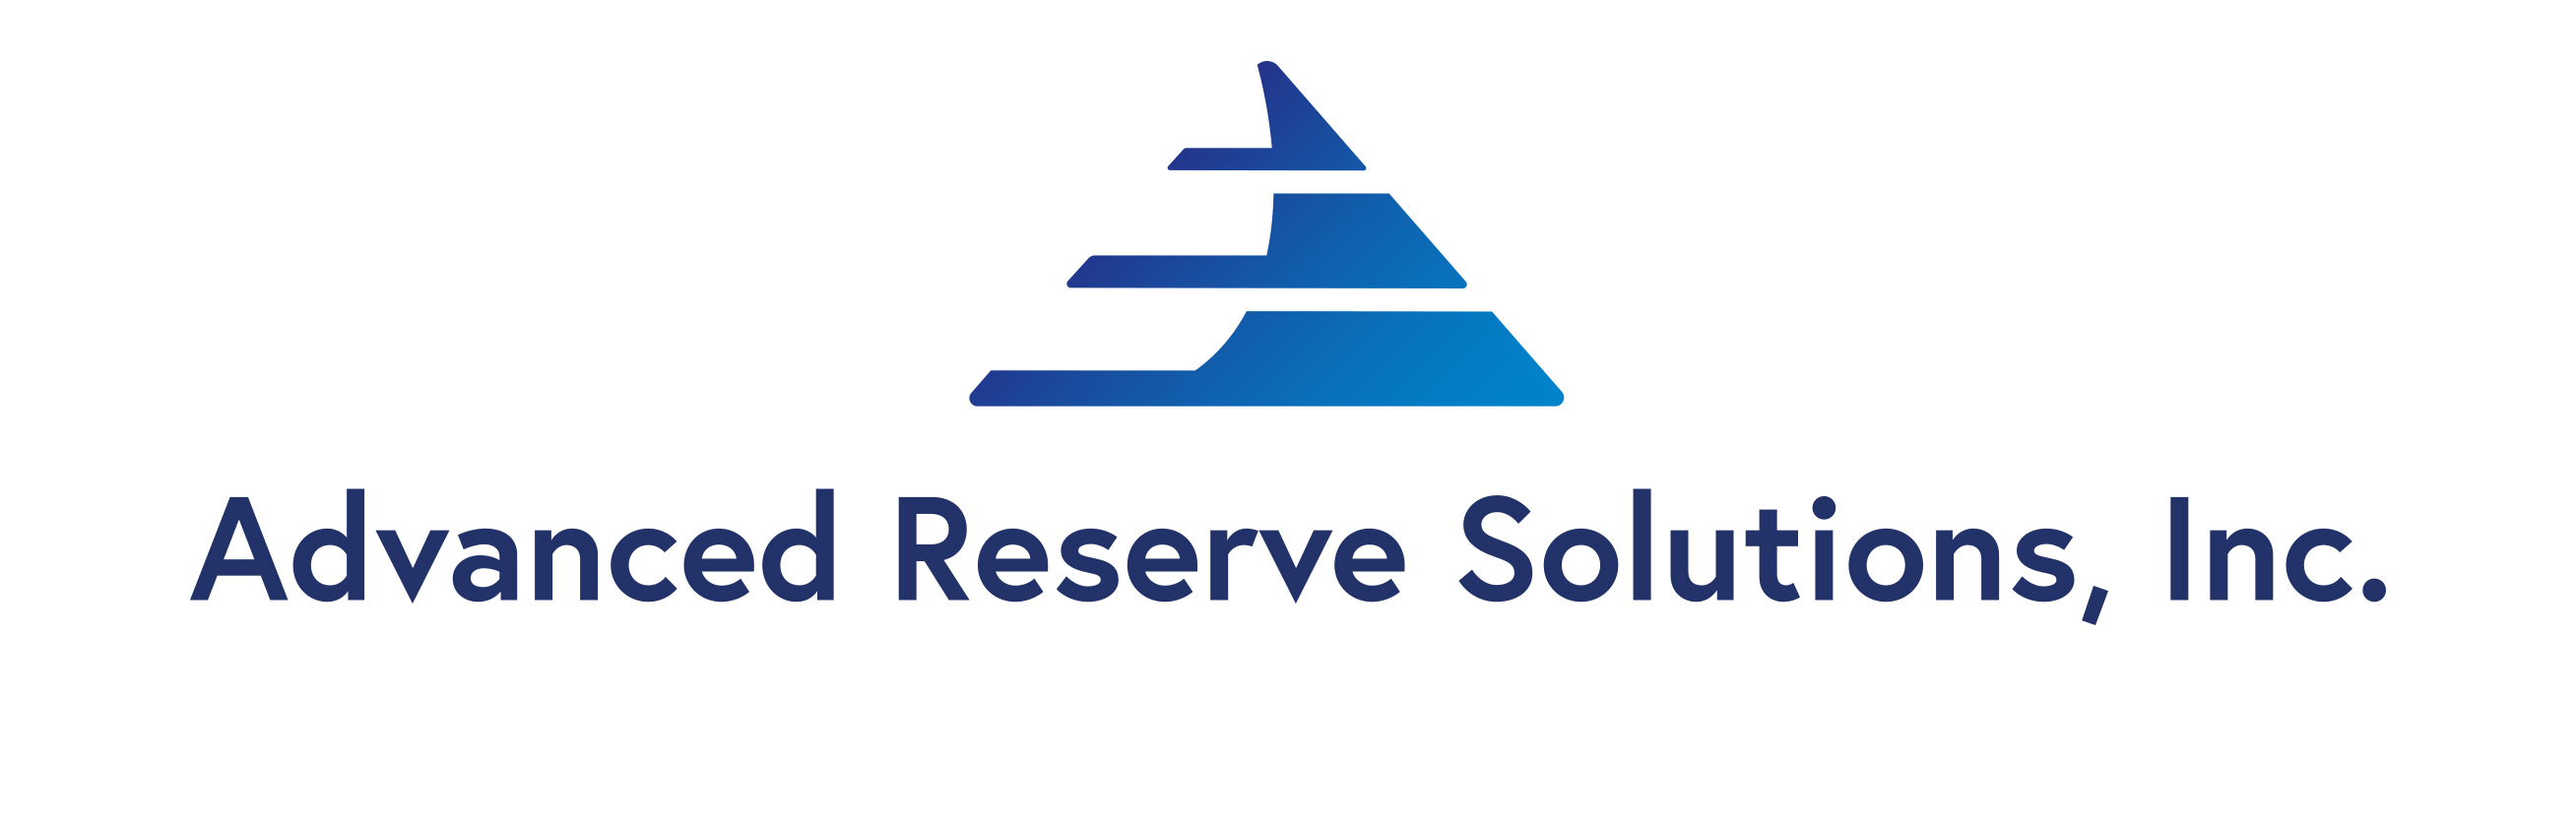 Advanced Reserve Solutions, Inc.